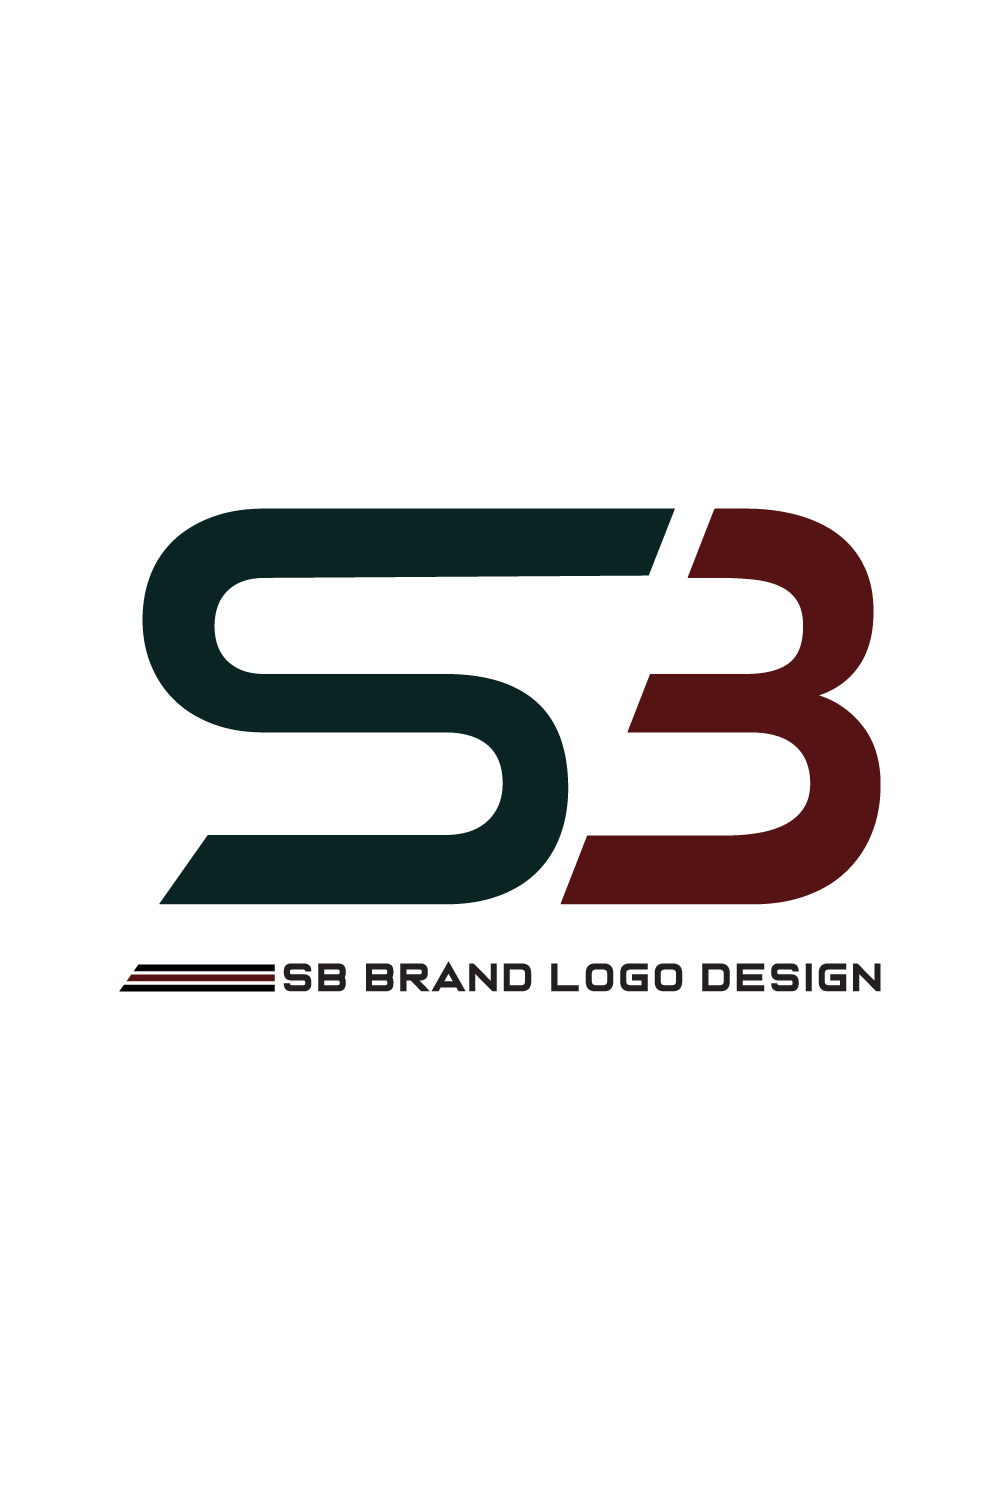 Initials SB letters logo design vector images SB logo design monogram illustration BS logo template best company identity pinterest preview image.